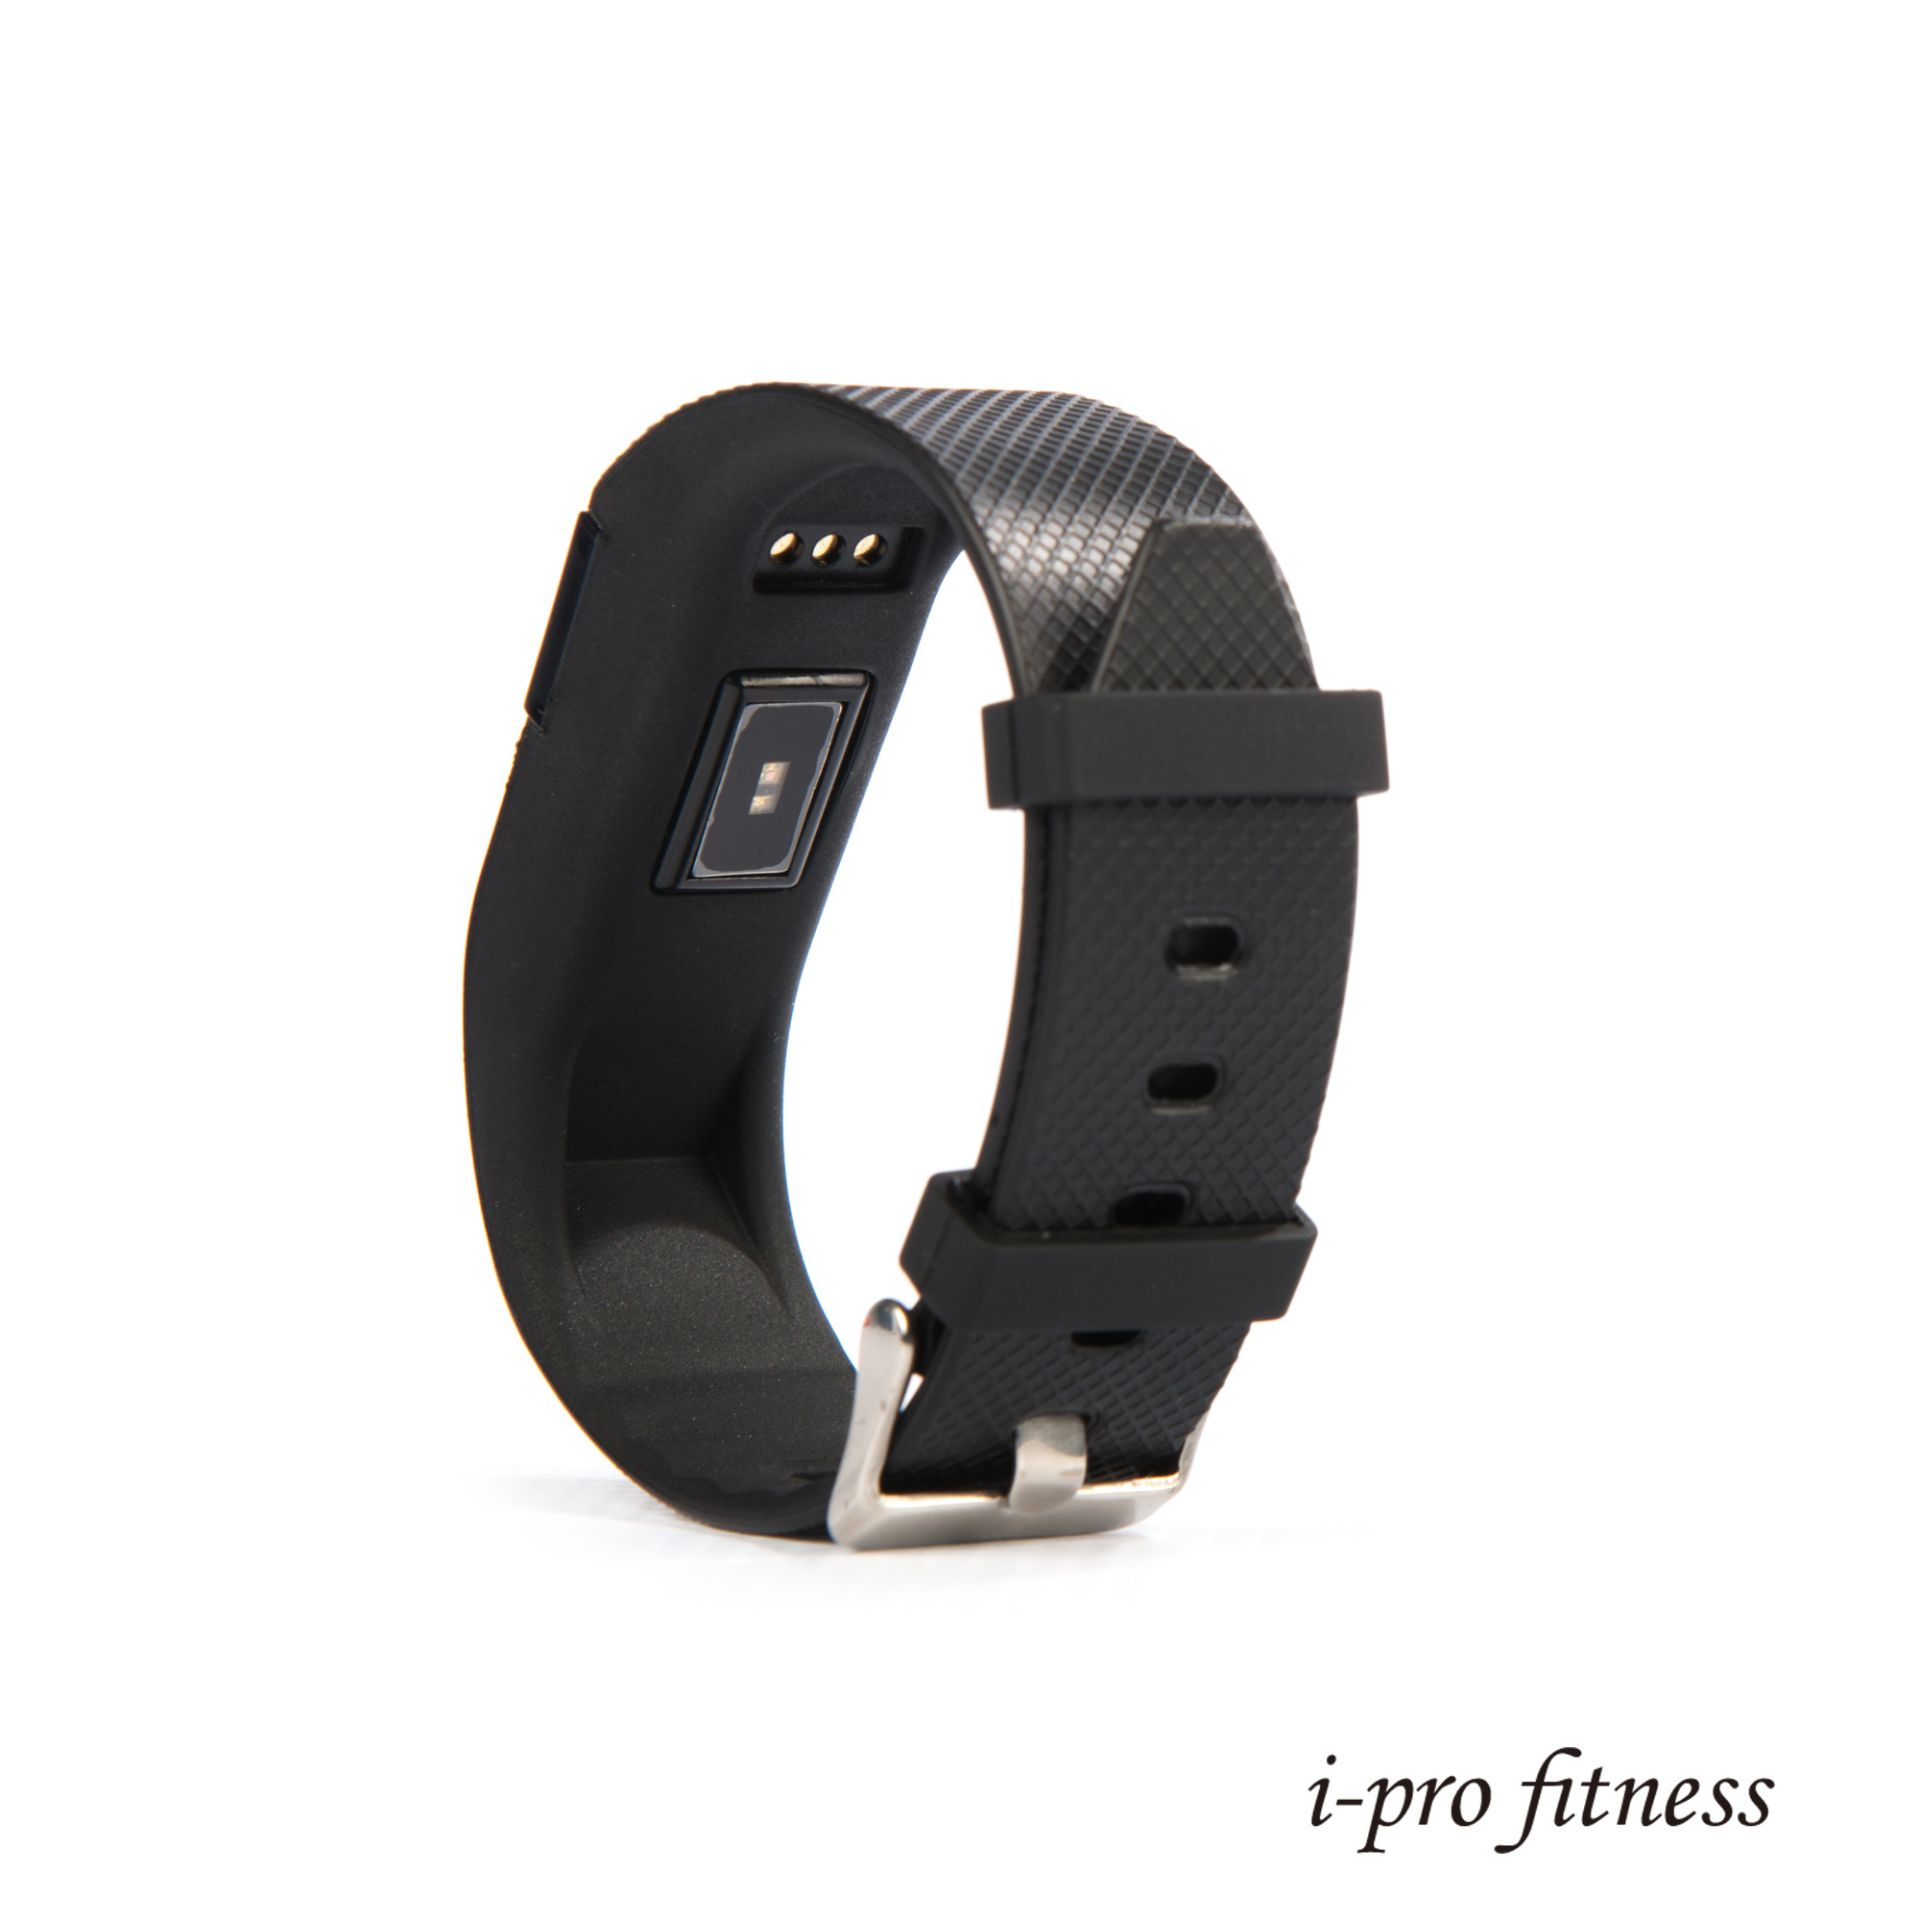 10x Fitness Tracker i-pro fitness, Bluetooth 4.0 Sports Smart Bracelet. - Image 8 of 8